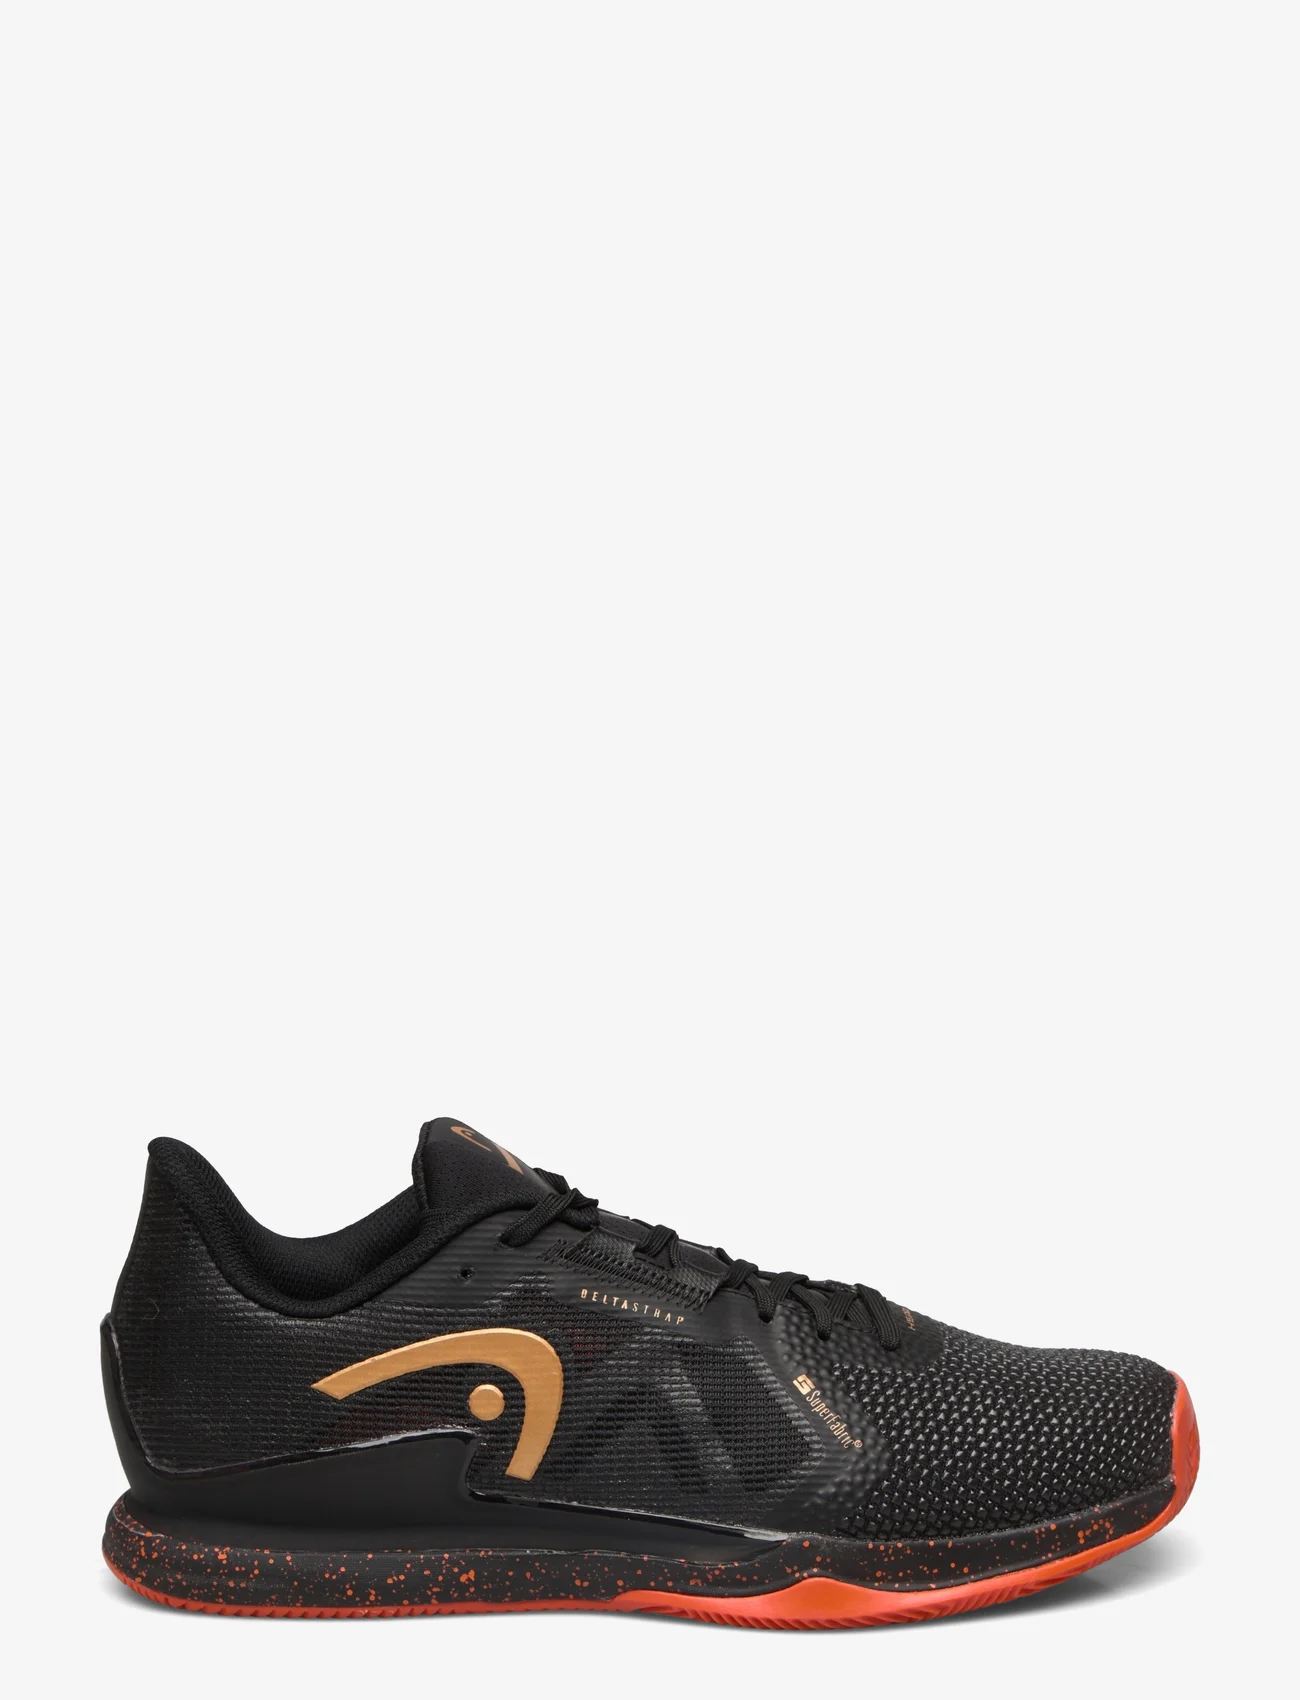 Head - HEAD Sprint Pro 3.5 SF Clay Tennis Shoes - rakečių sporto batai - black/orange - 1